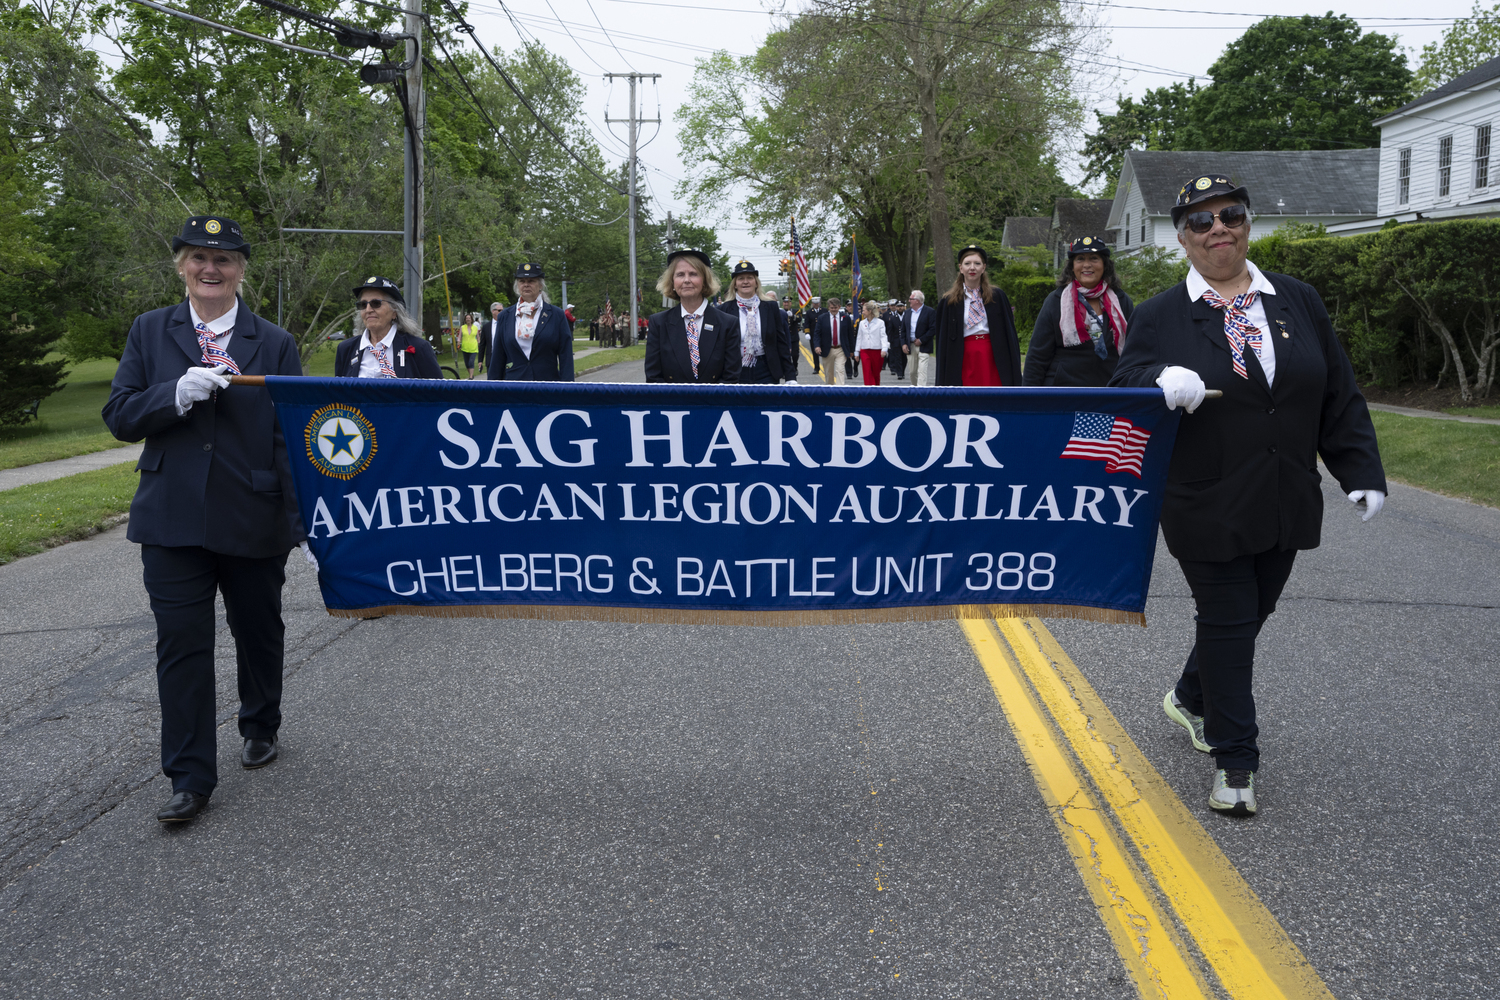 The Sag Harbor American Legion Auxiliary.  LORI HAWKINS